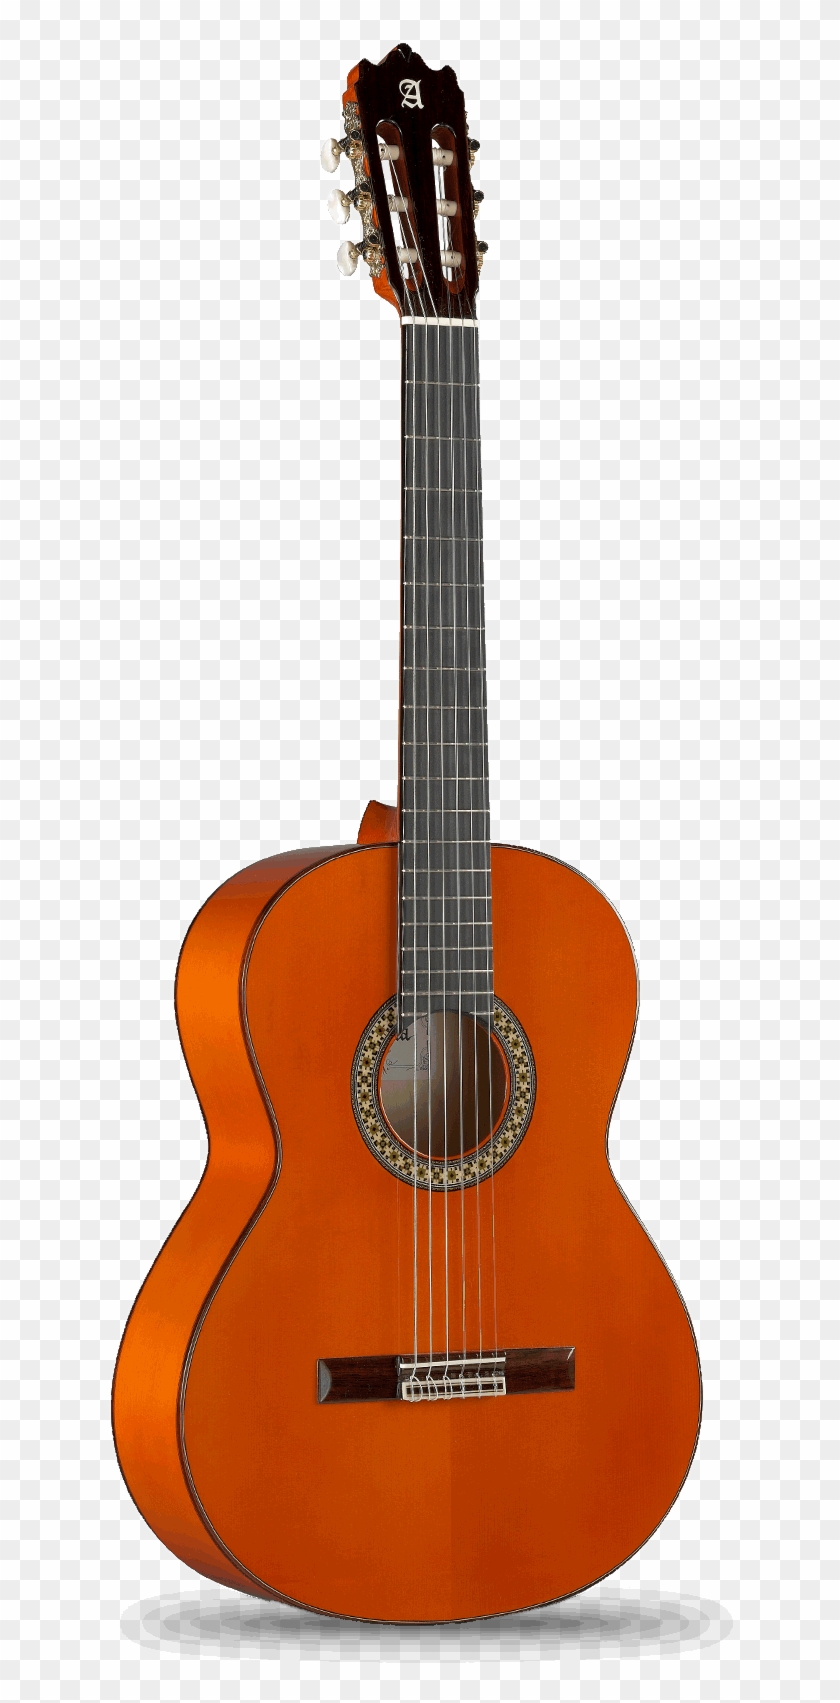 4 F Flamenco Model By Guitarras Alhambra - Martin Smith Guitars Clipart #5477603